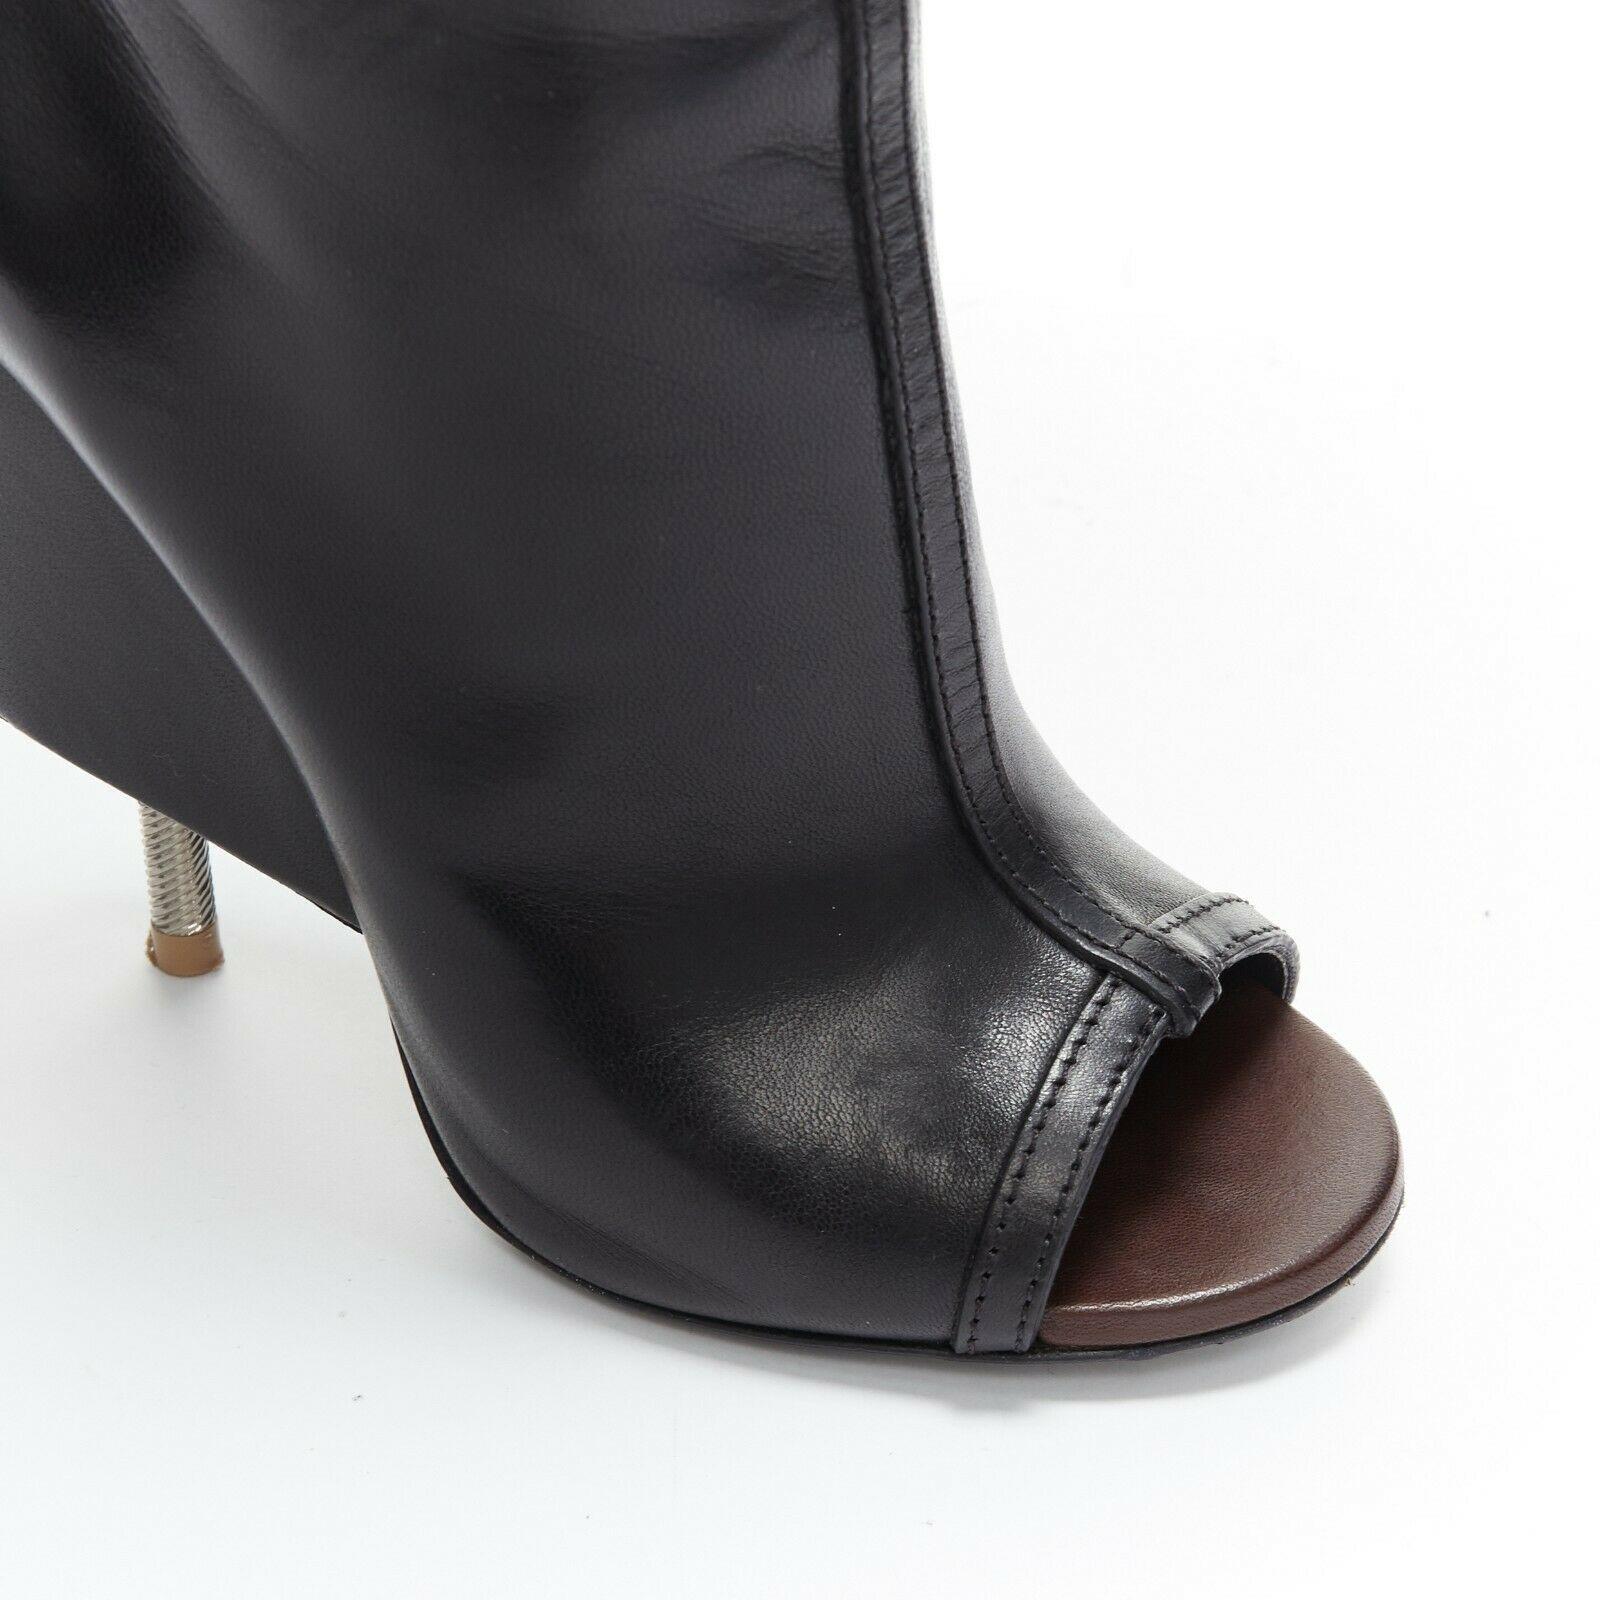 Women's GIVENCHY RICCARDO TISCI Narlia black leather thigh high boots wedge heel FR37